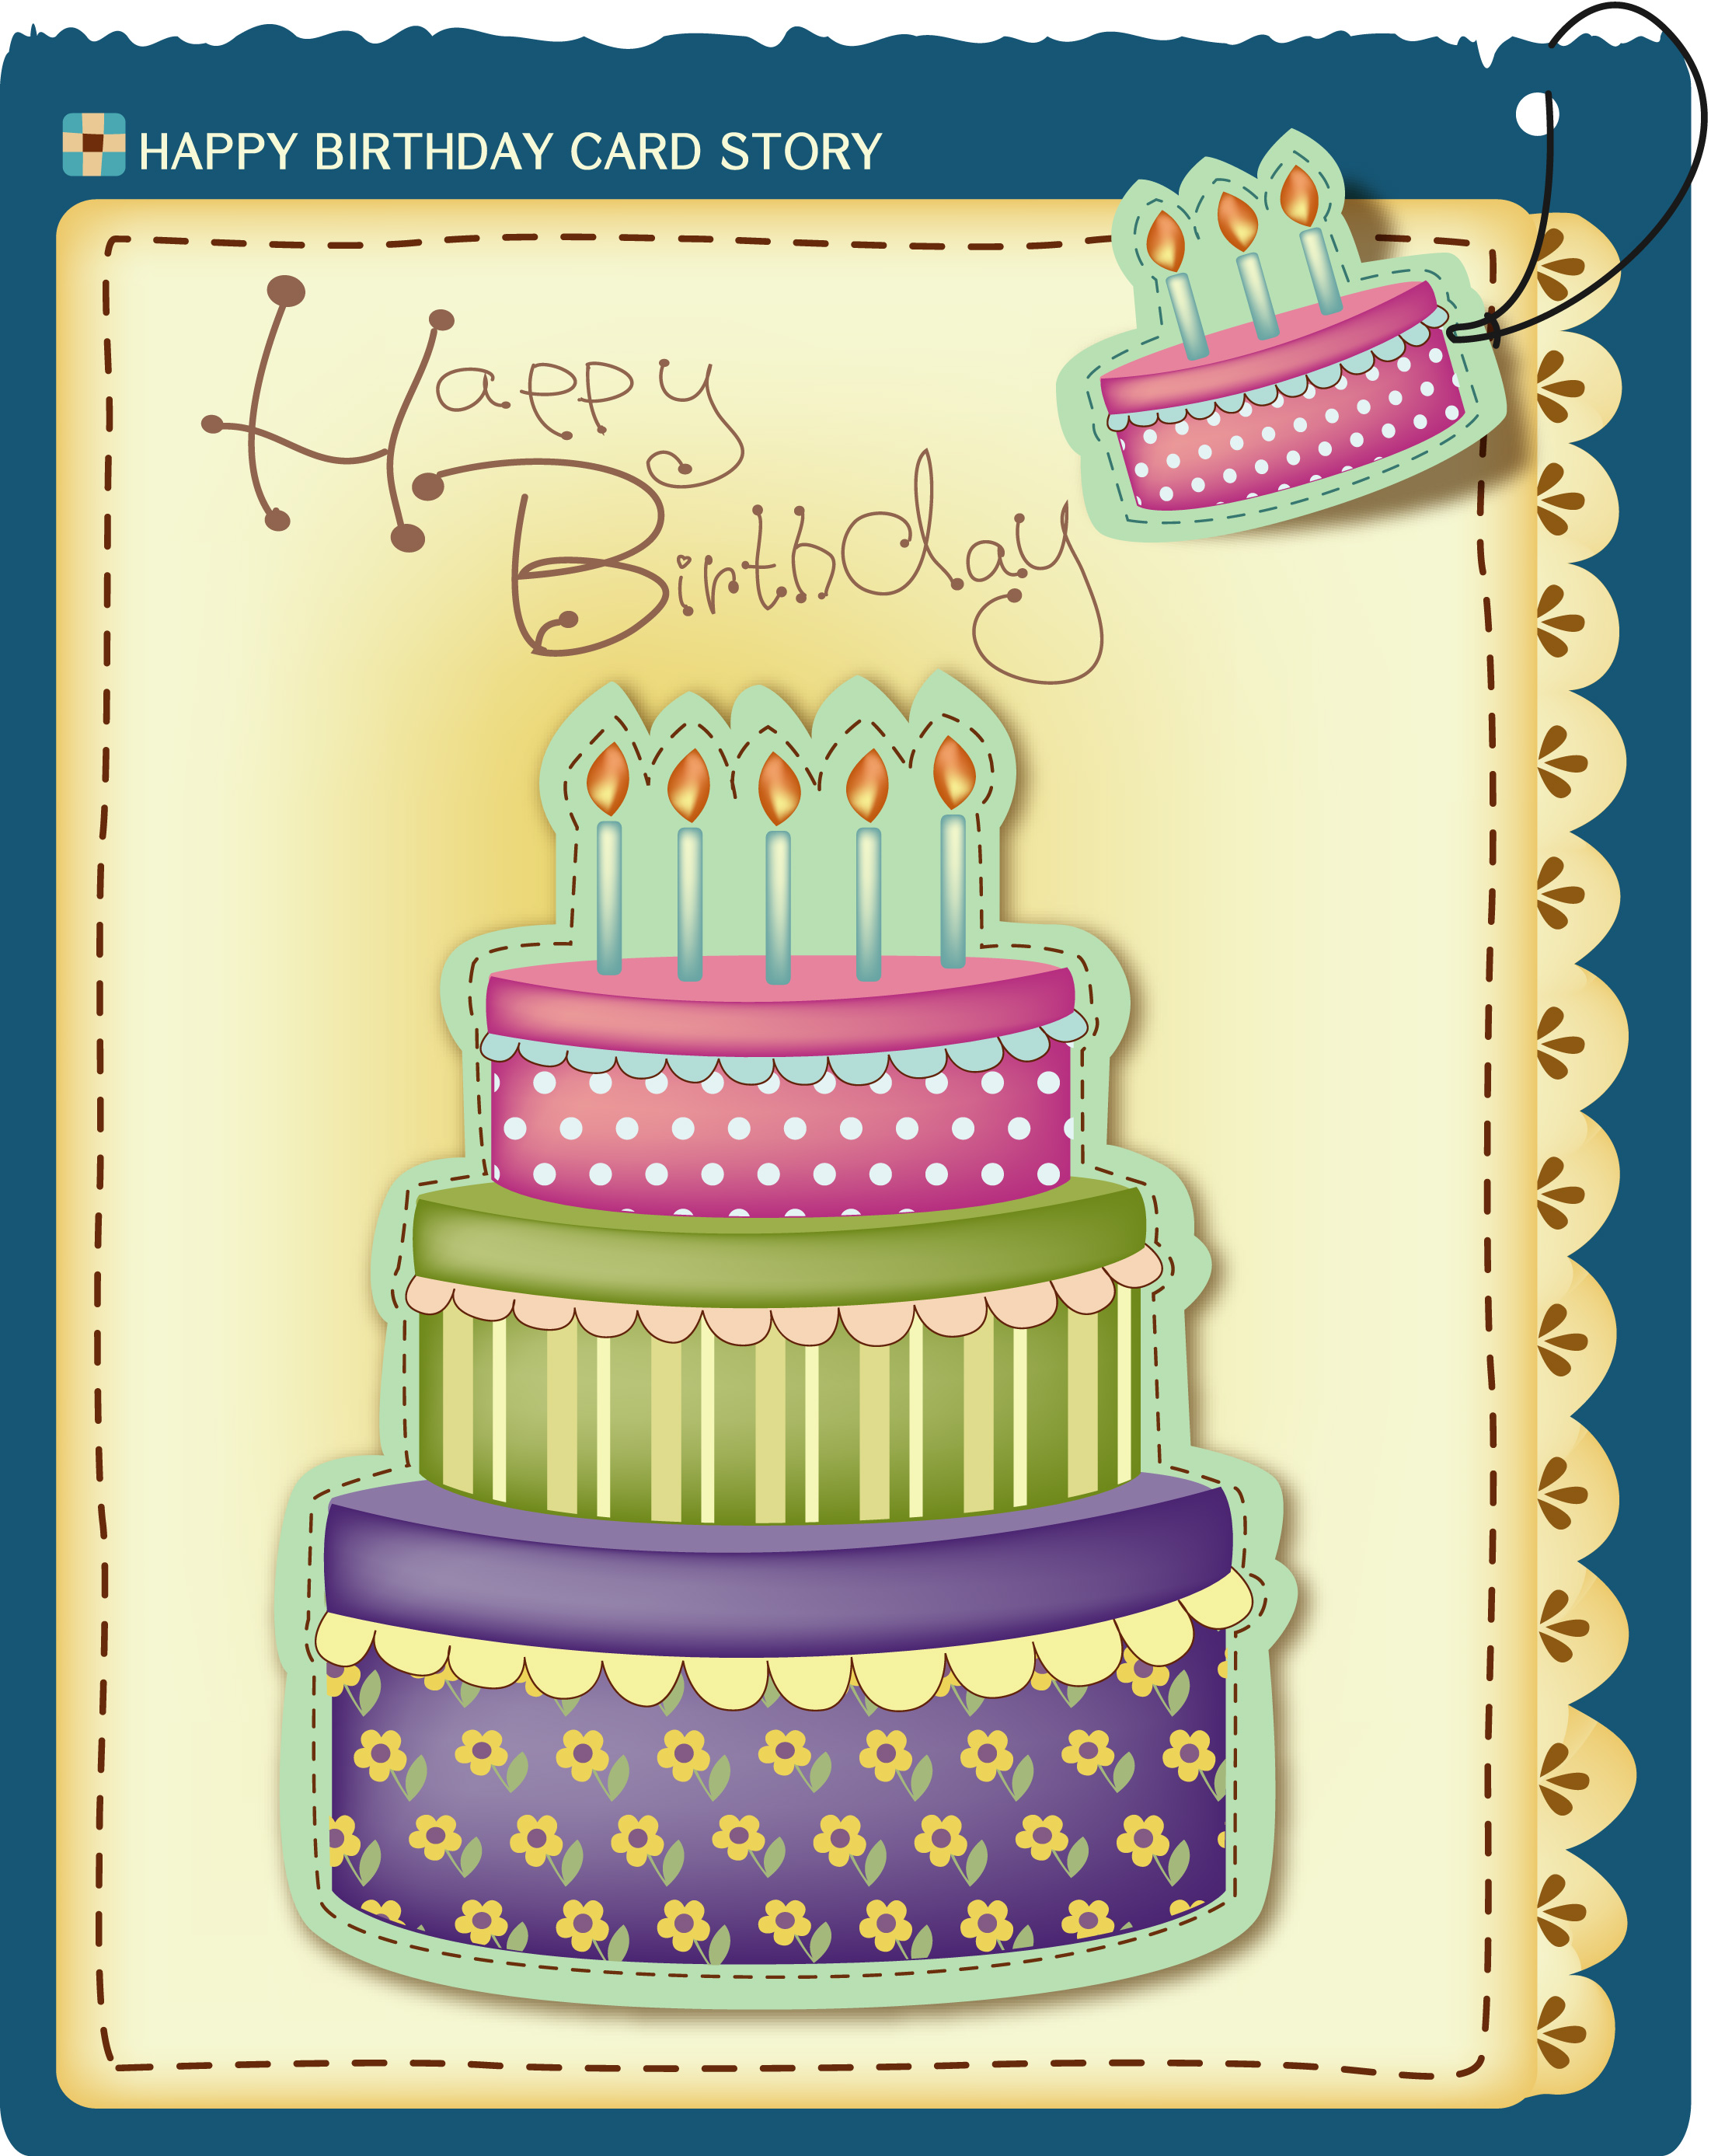 Happy Birthday Card Designs Free